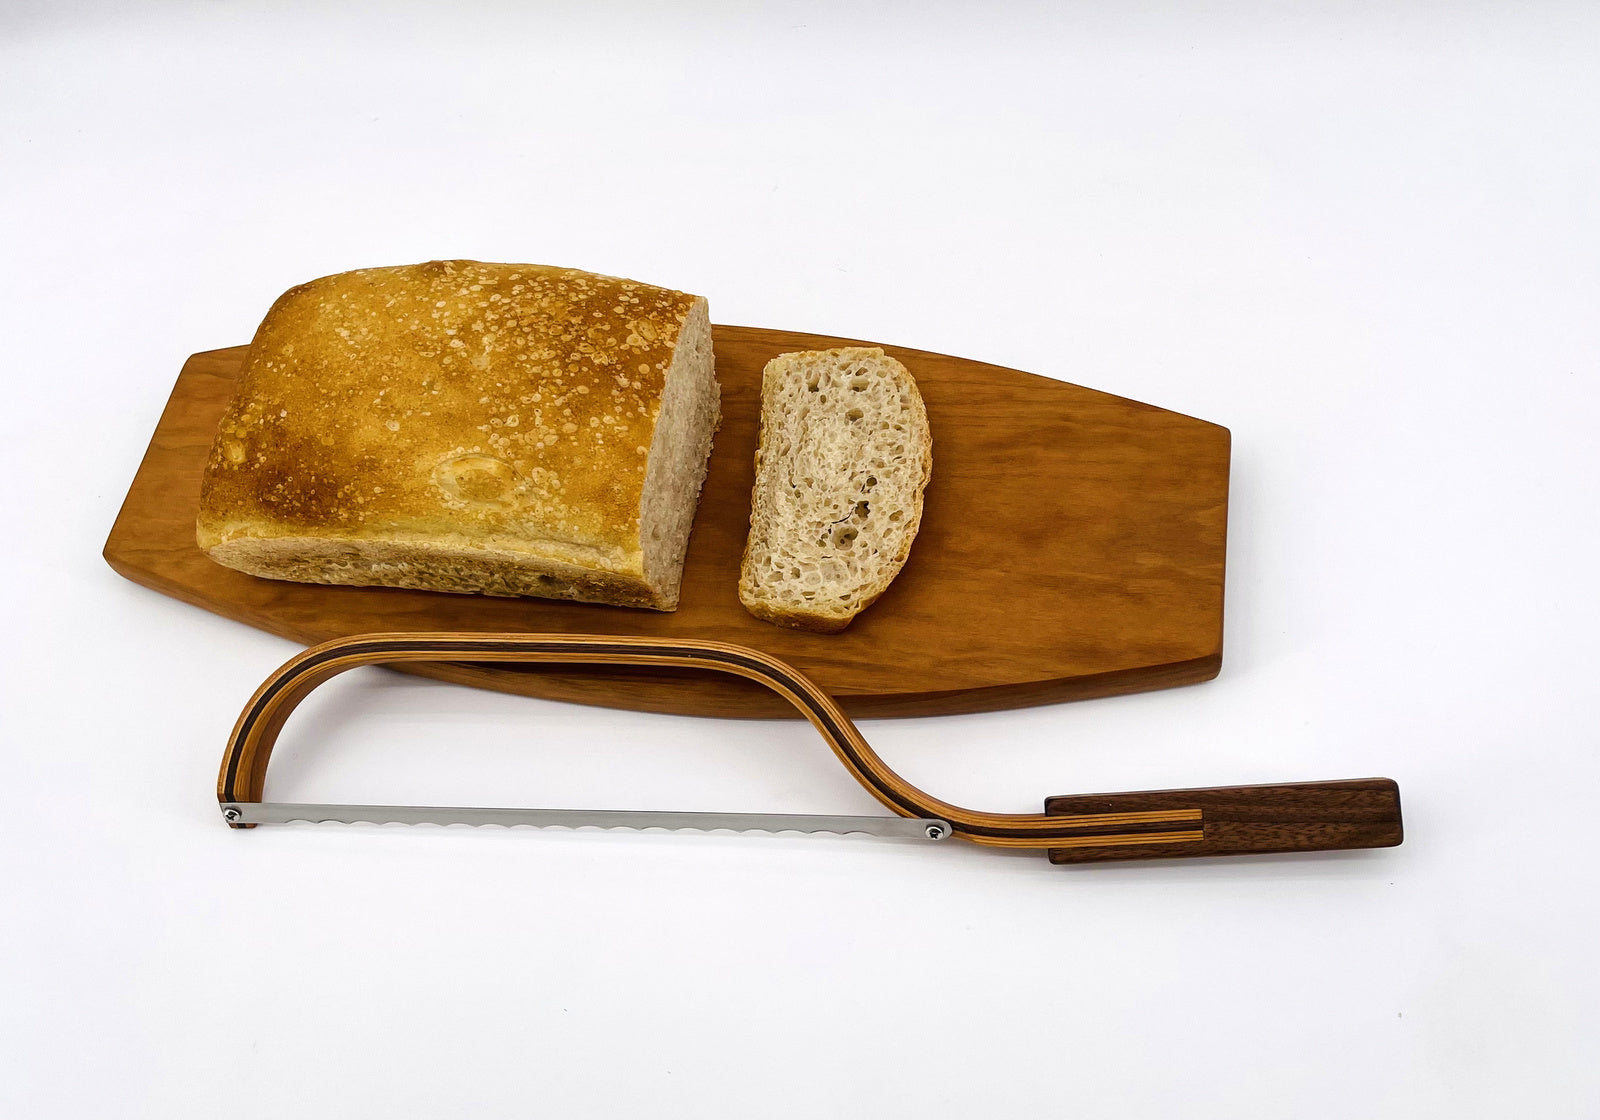 Bread Bow & Board Set